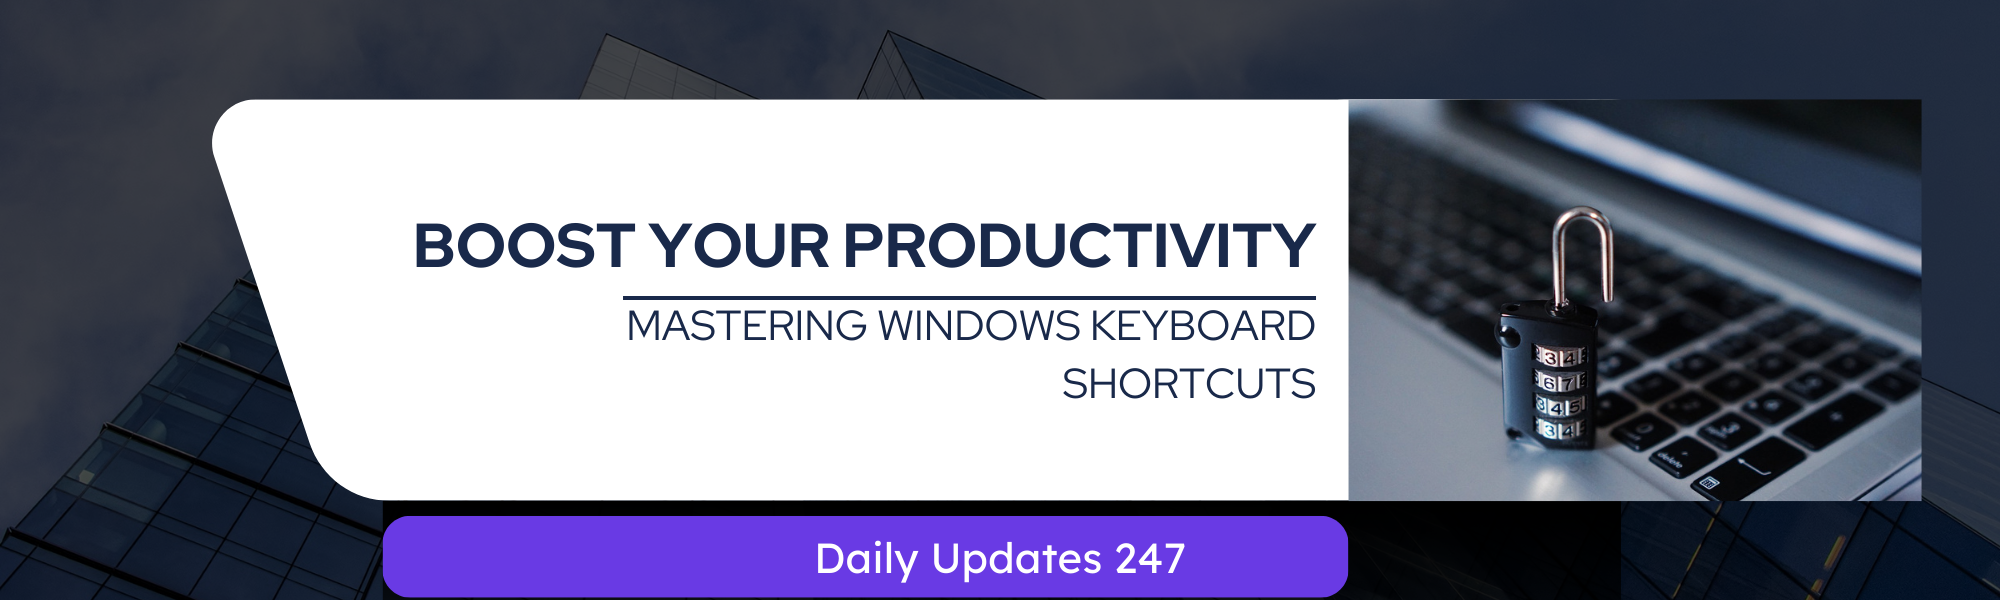 Mastering Windows Keyboard Shortcuts